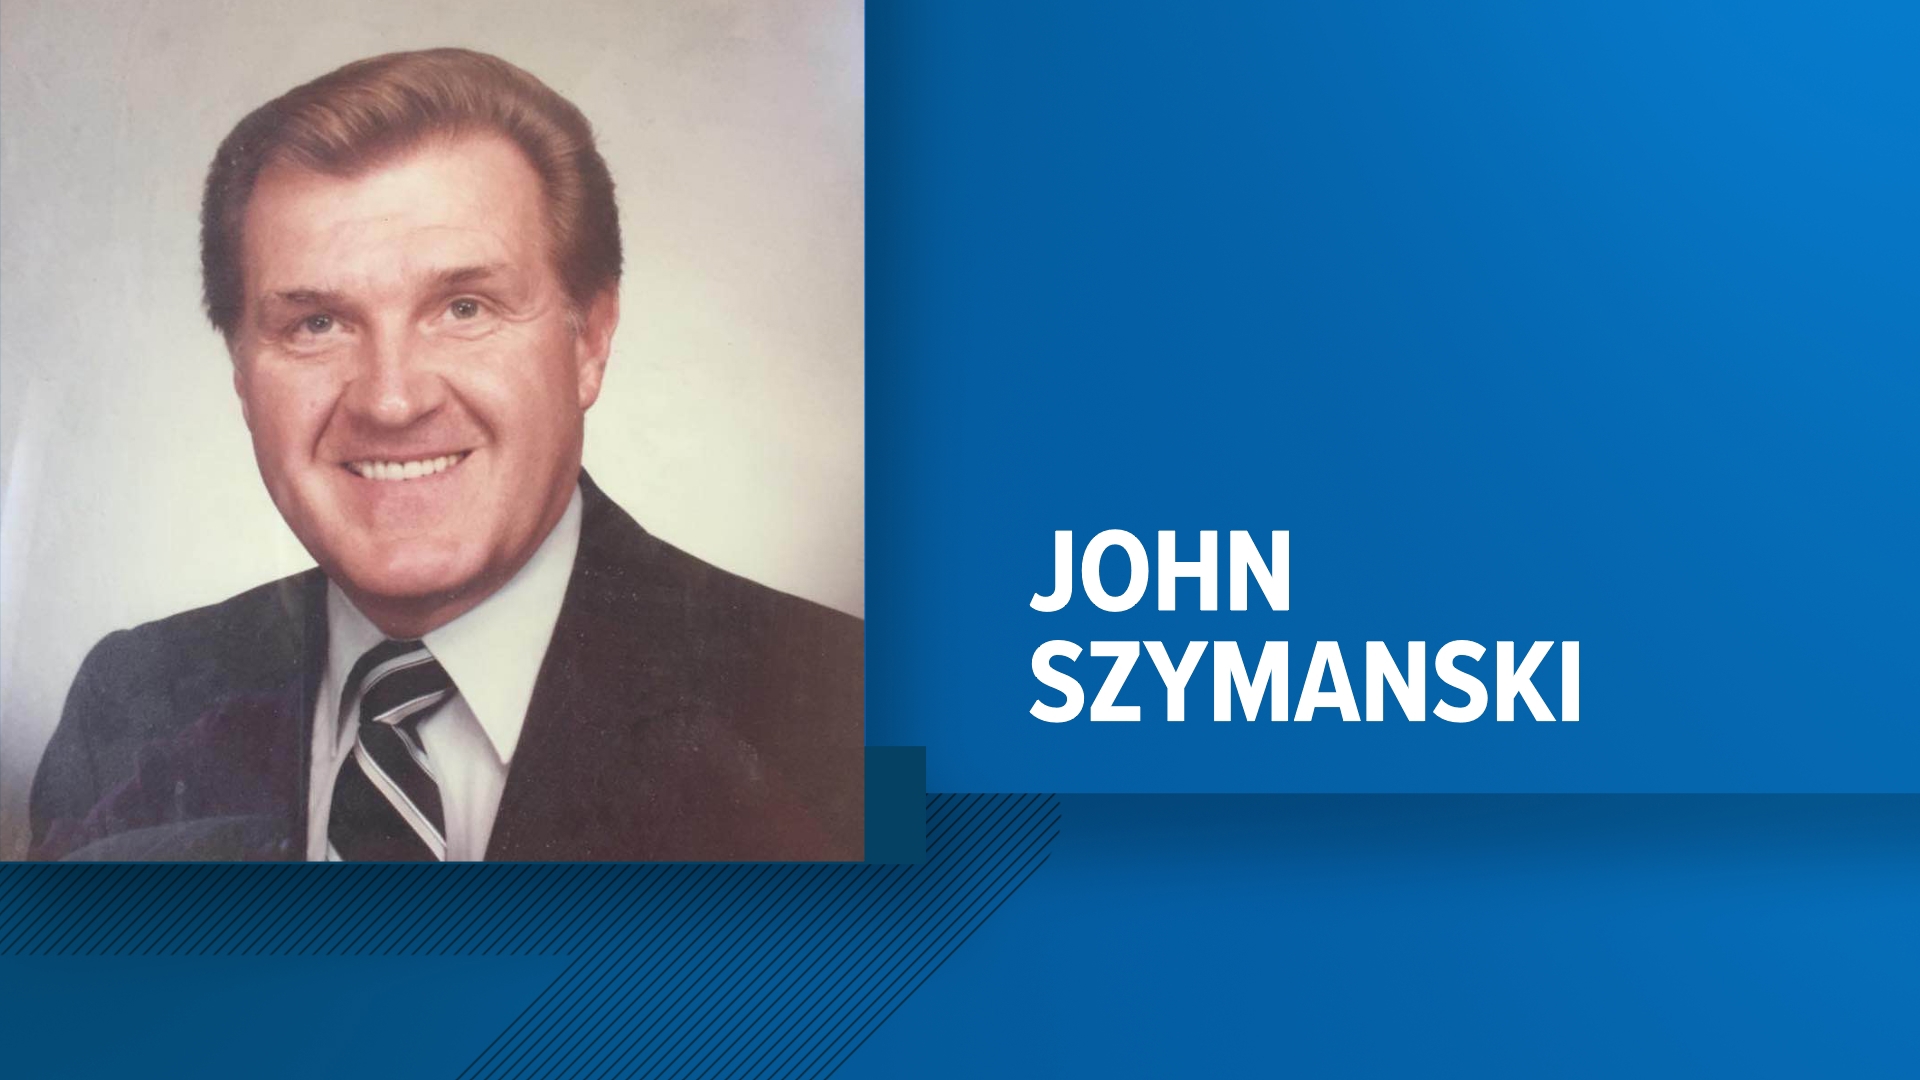 Former Lackawanna County Sheriff John Szymanski passed away last Wednesday at the age of 87.